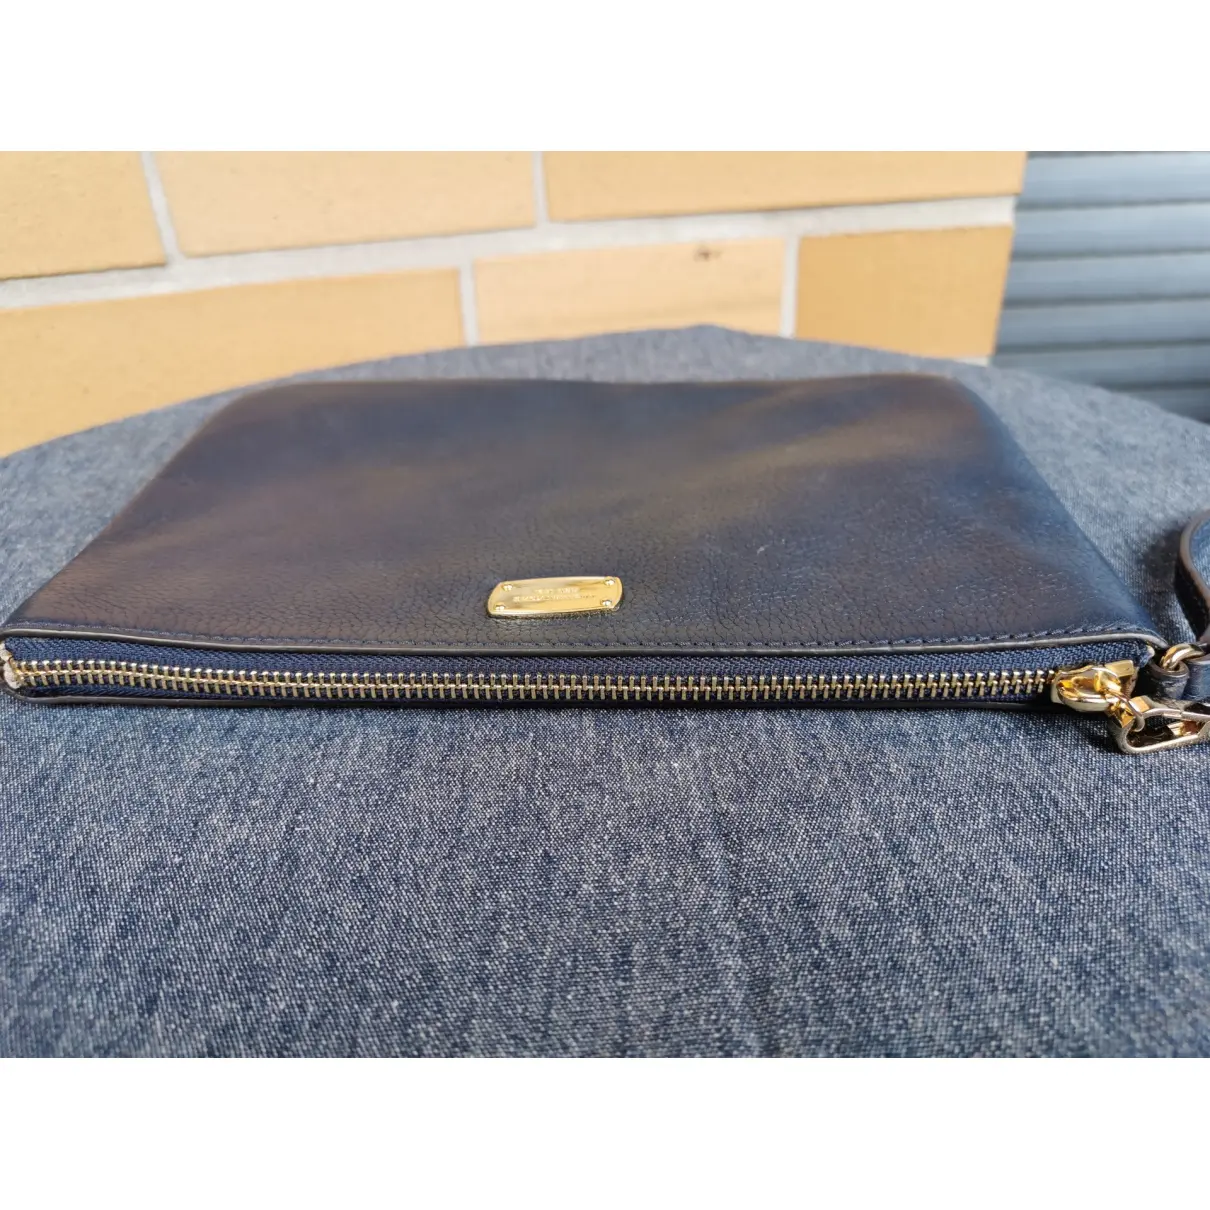 Patent leather clutch bag Michael Kors